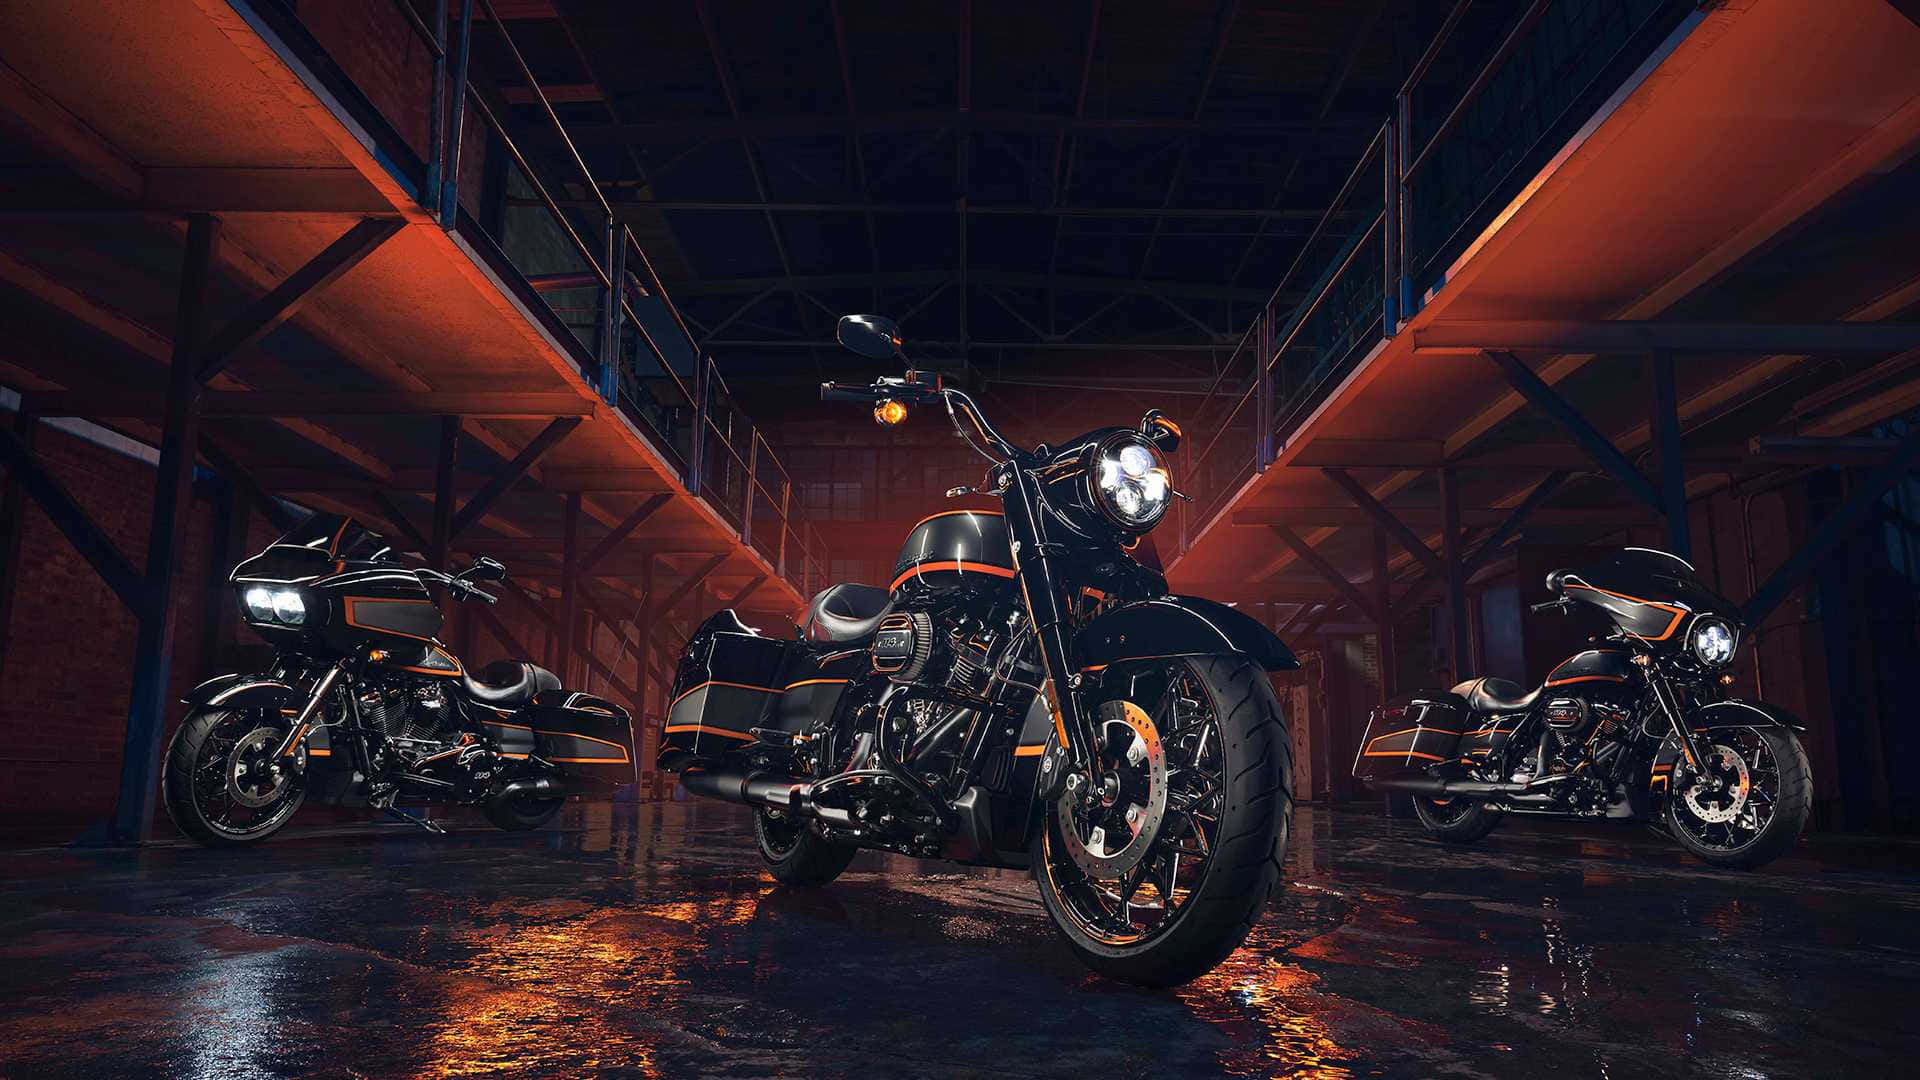 Harley Davidson Hd In The Warehouse Wallpaper